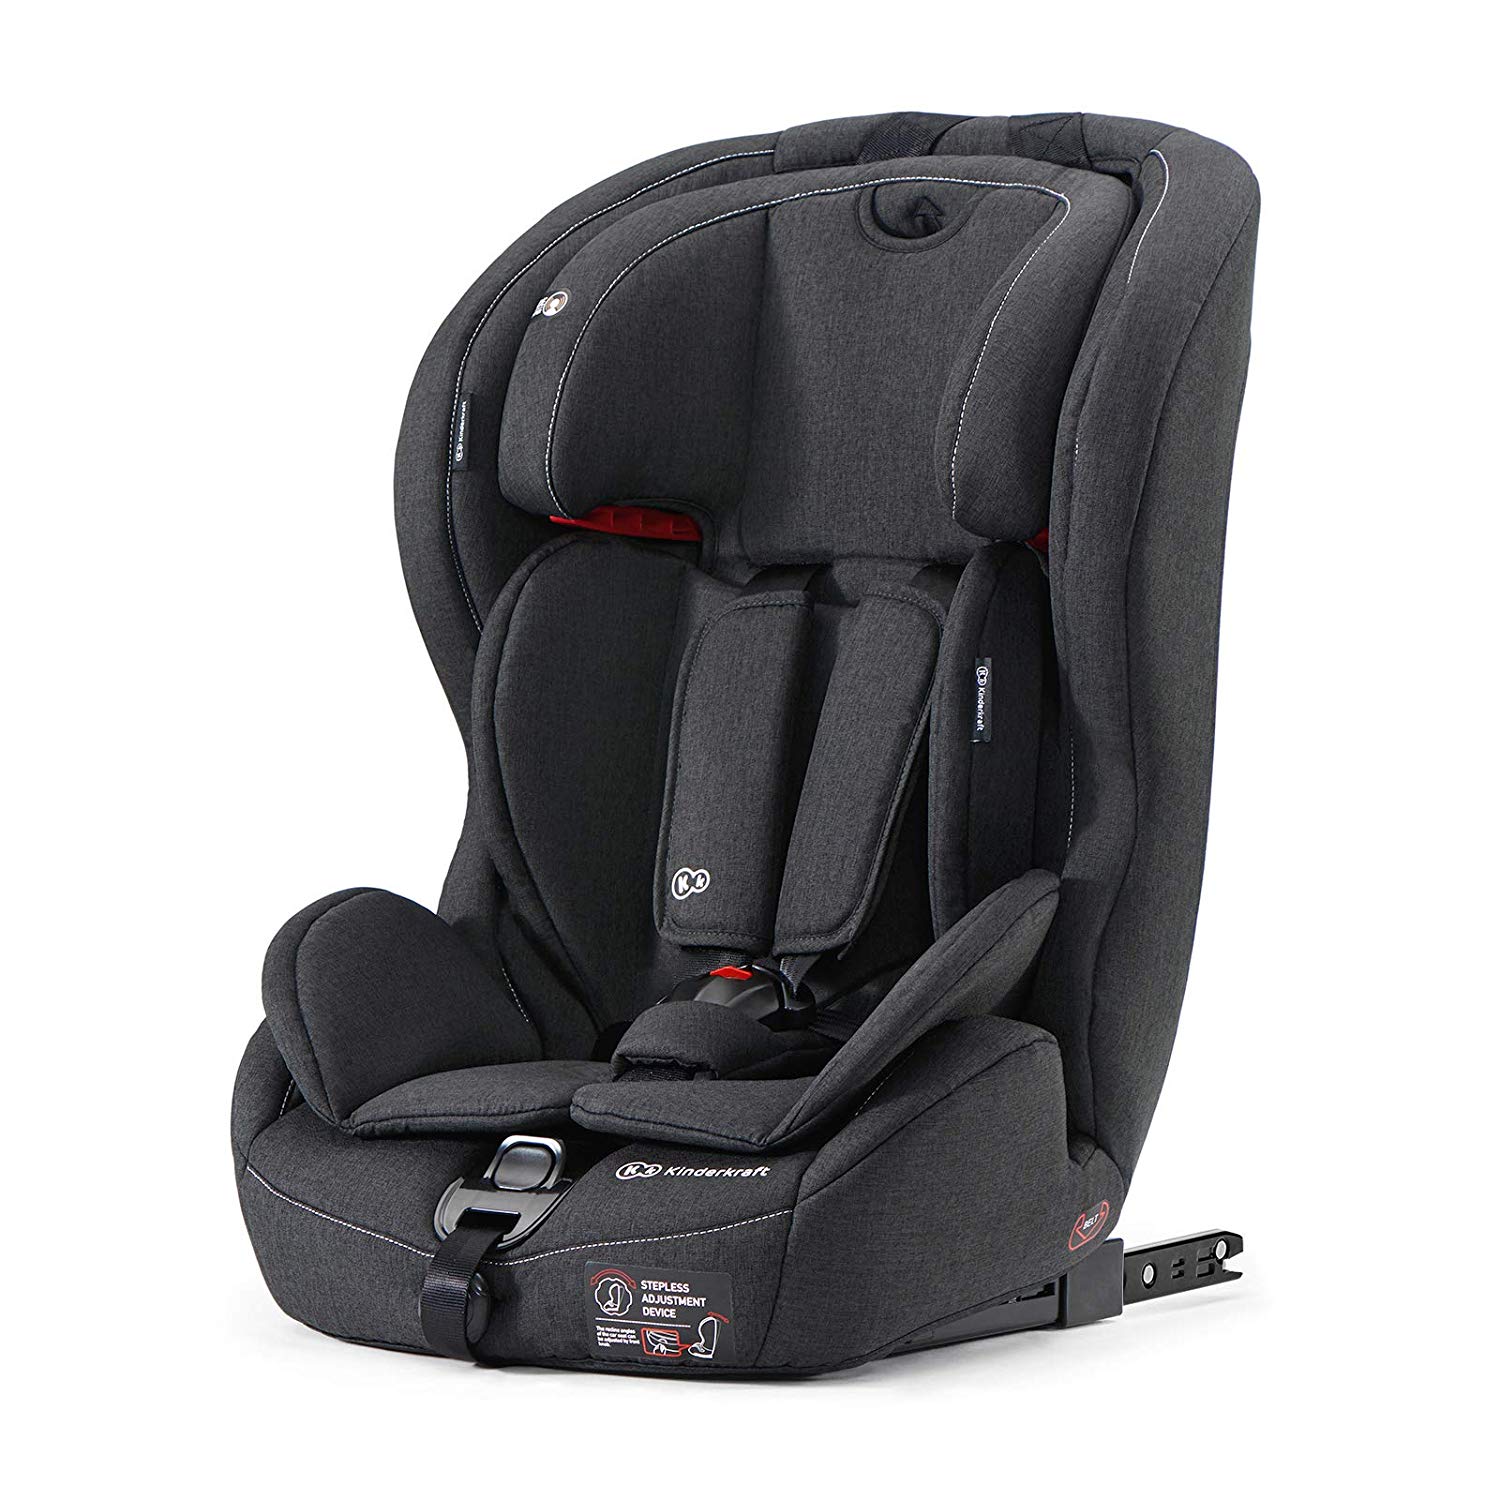 Kinderkraft Safetyfix Isofix Child Car Seat 9 to 36 kg Group 1 2 3 Black